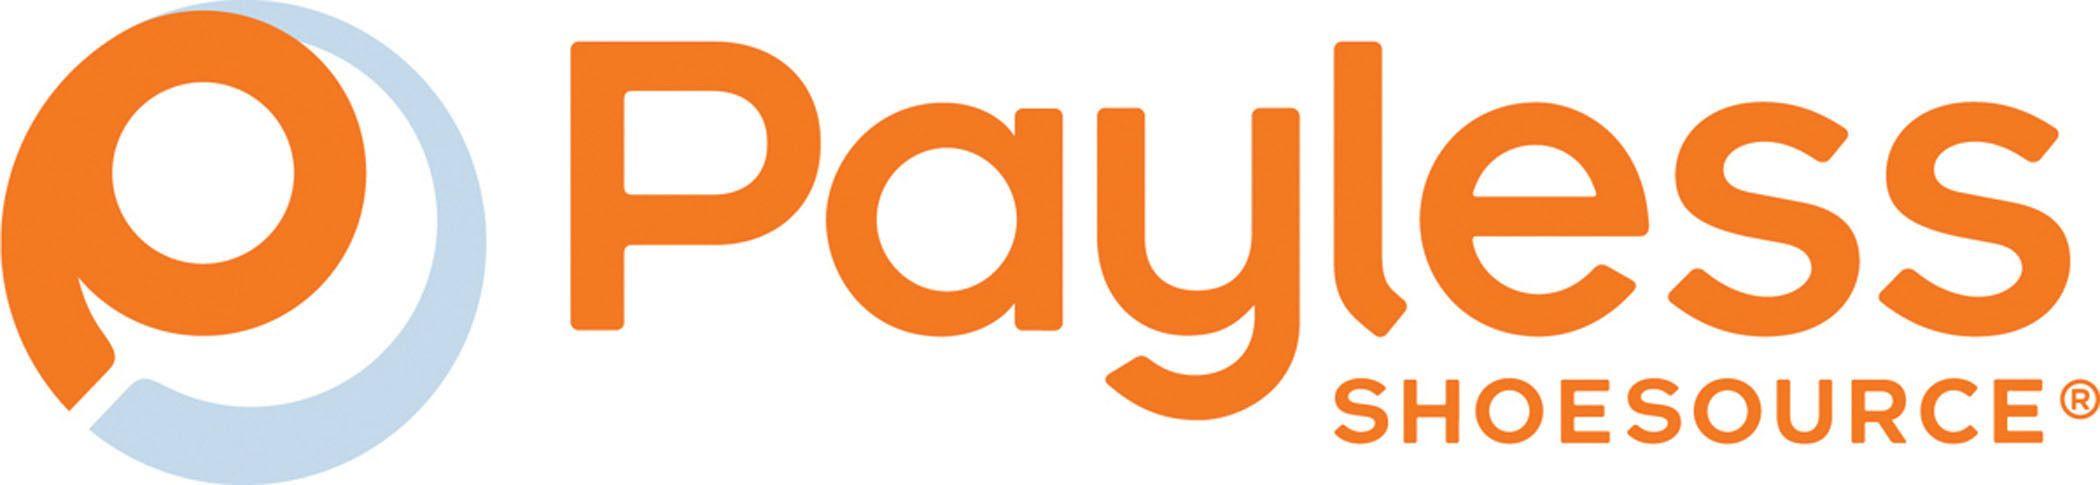 Payless Logo - Lake Pleasant Towne Center | PAYLESS SHOESOURCE LOGO